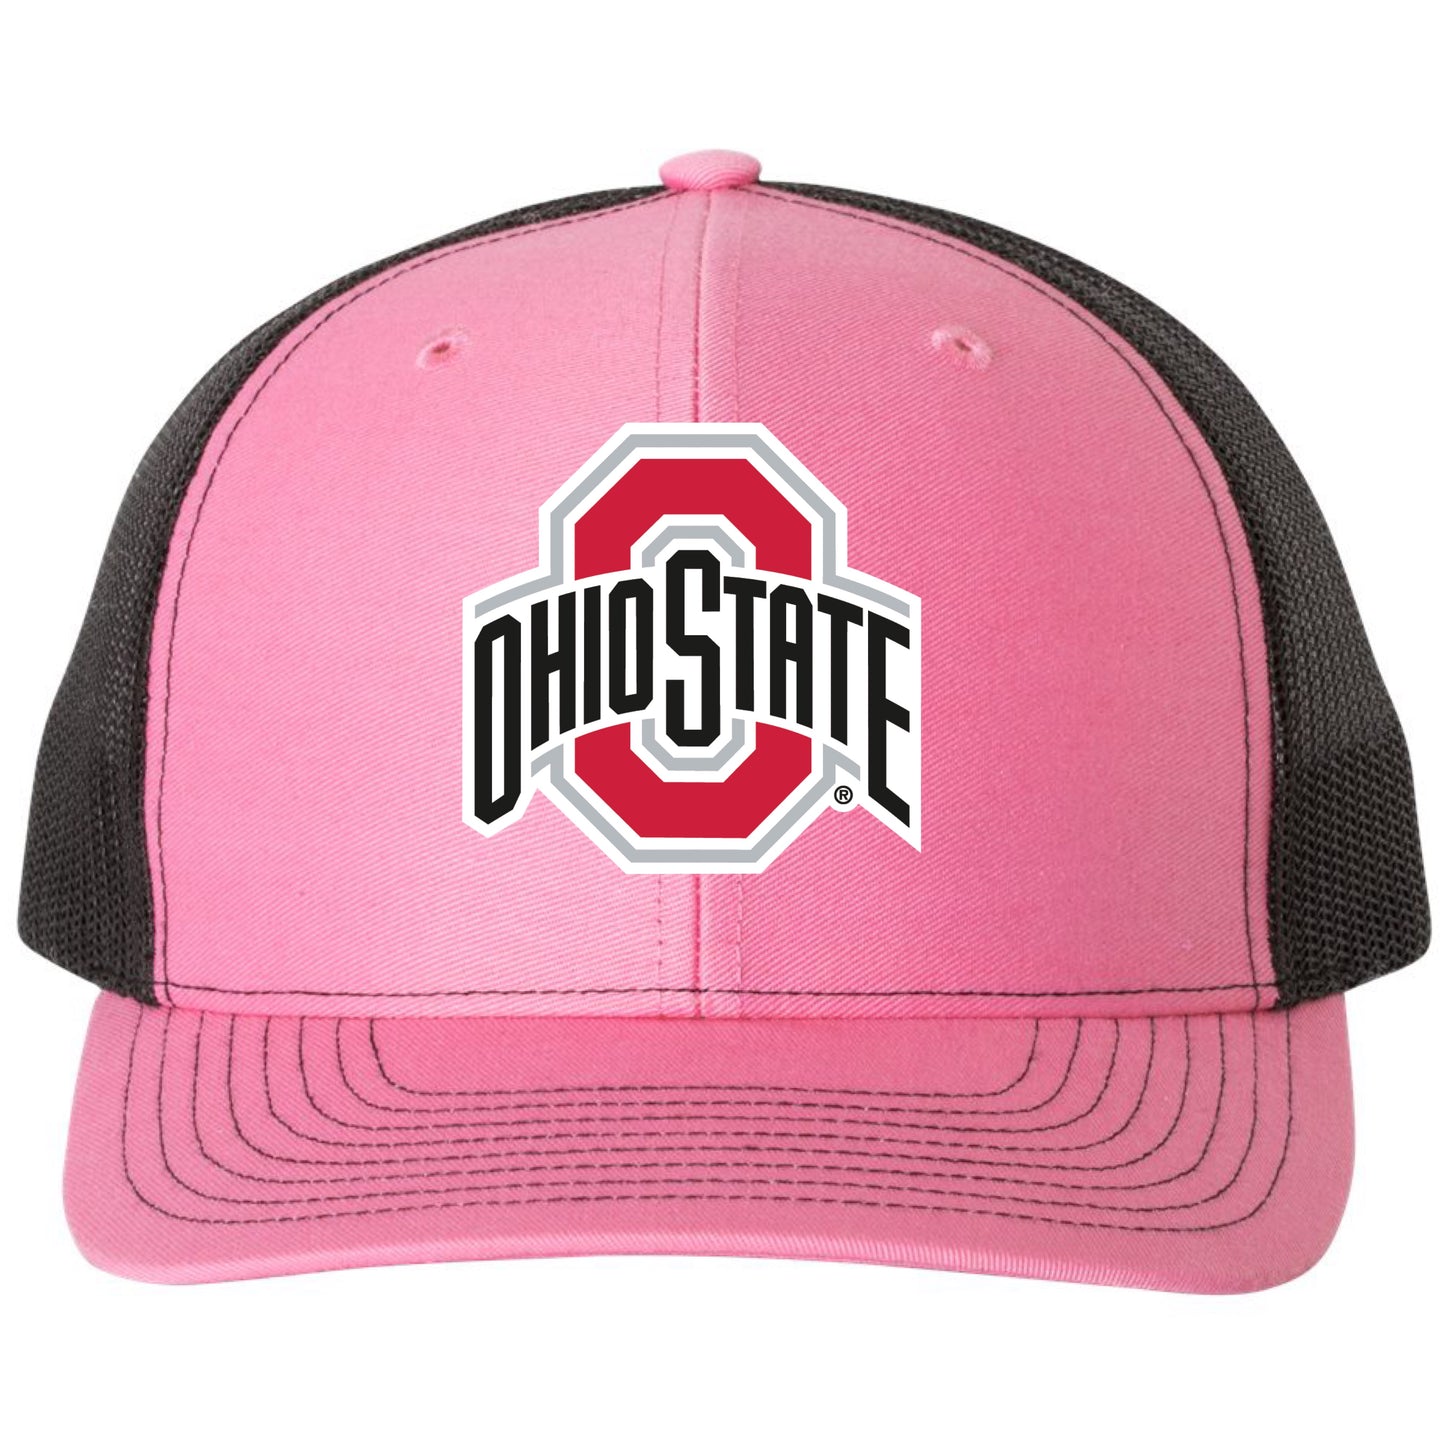 Ohio State Buckeyes 3D Snapback Trucker Hat- Hot Pink/ Black - Ten Gallon Hat Co.